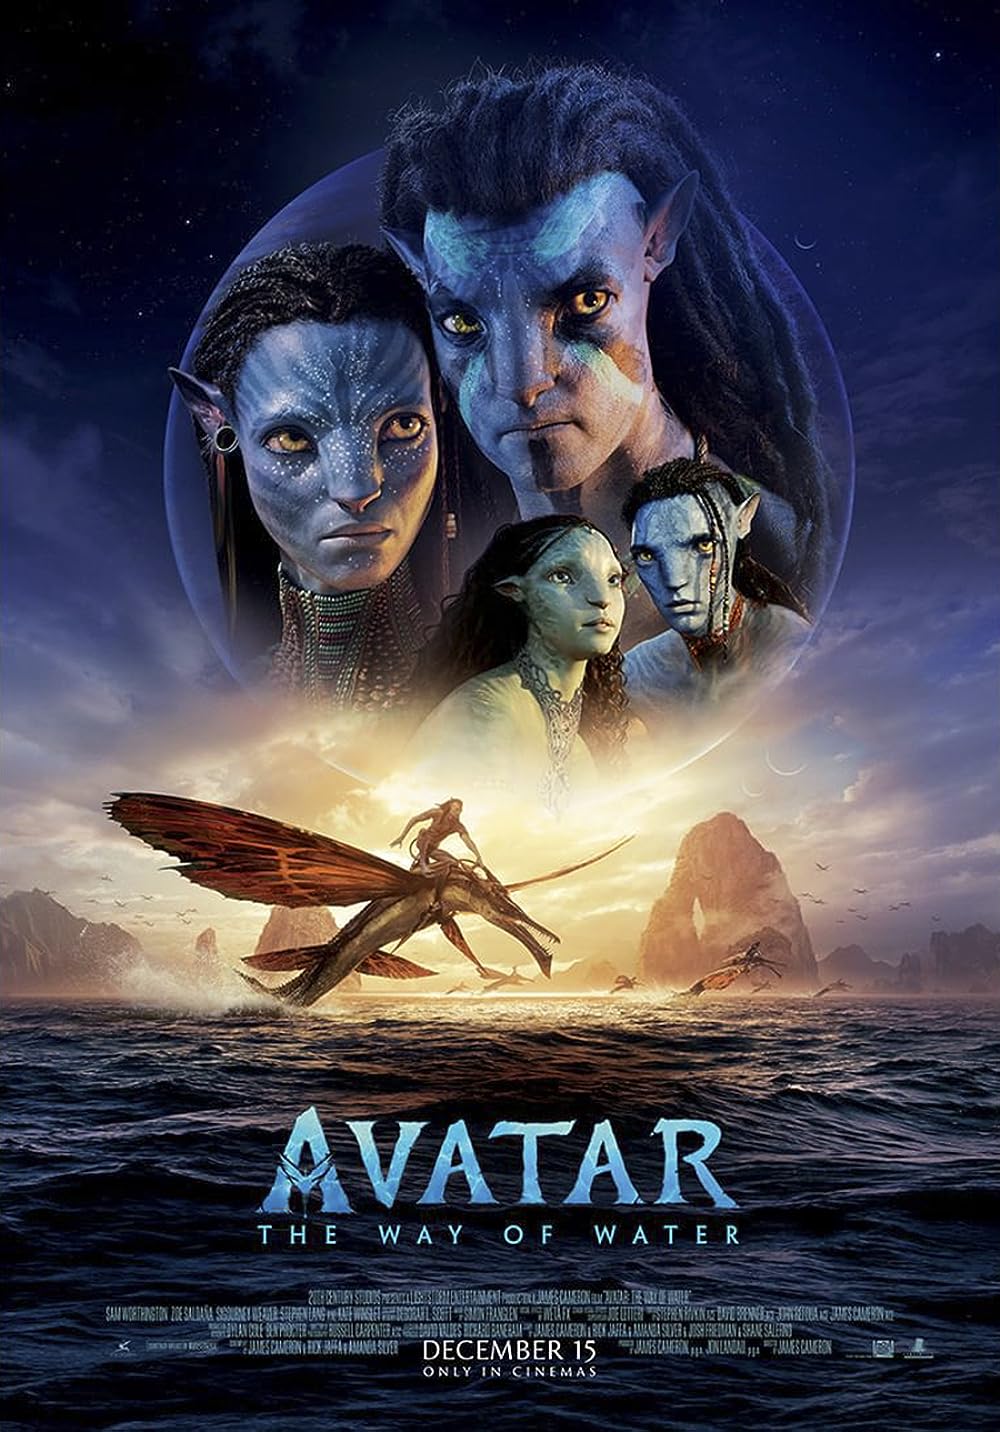 Stiahni si 3D Filmy Avatar: Cesta vody / Avatar: The Way of Water 3D (SK)(2022) = CSFD 80%